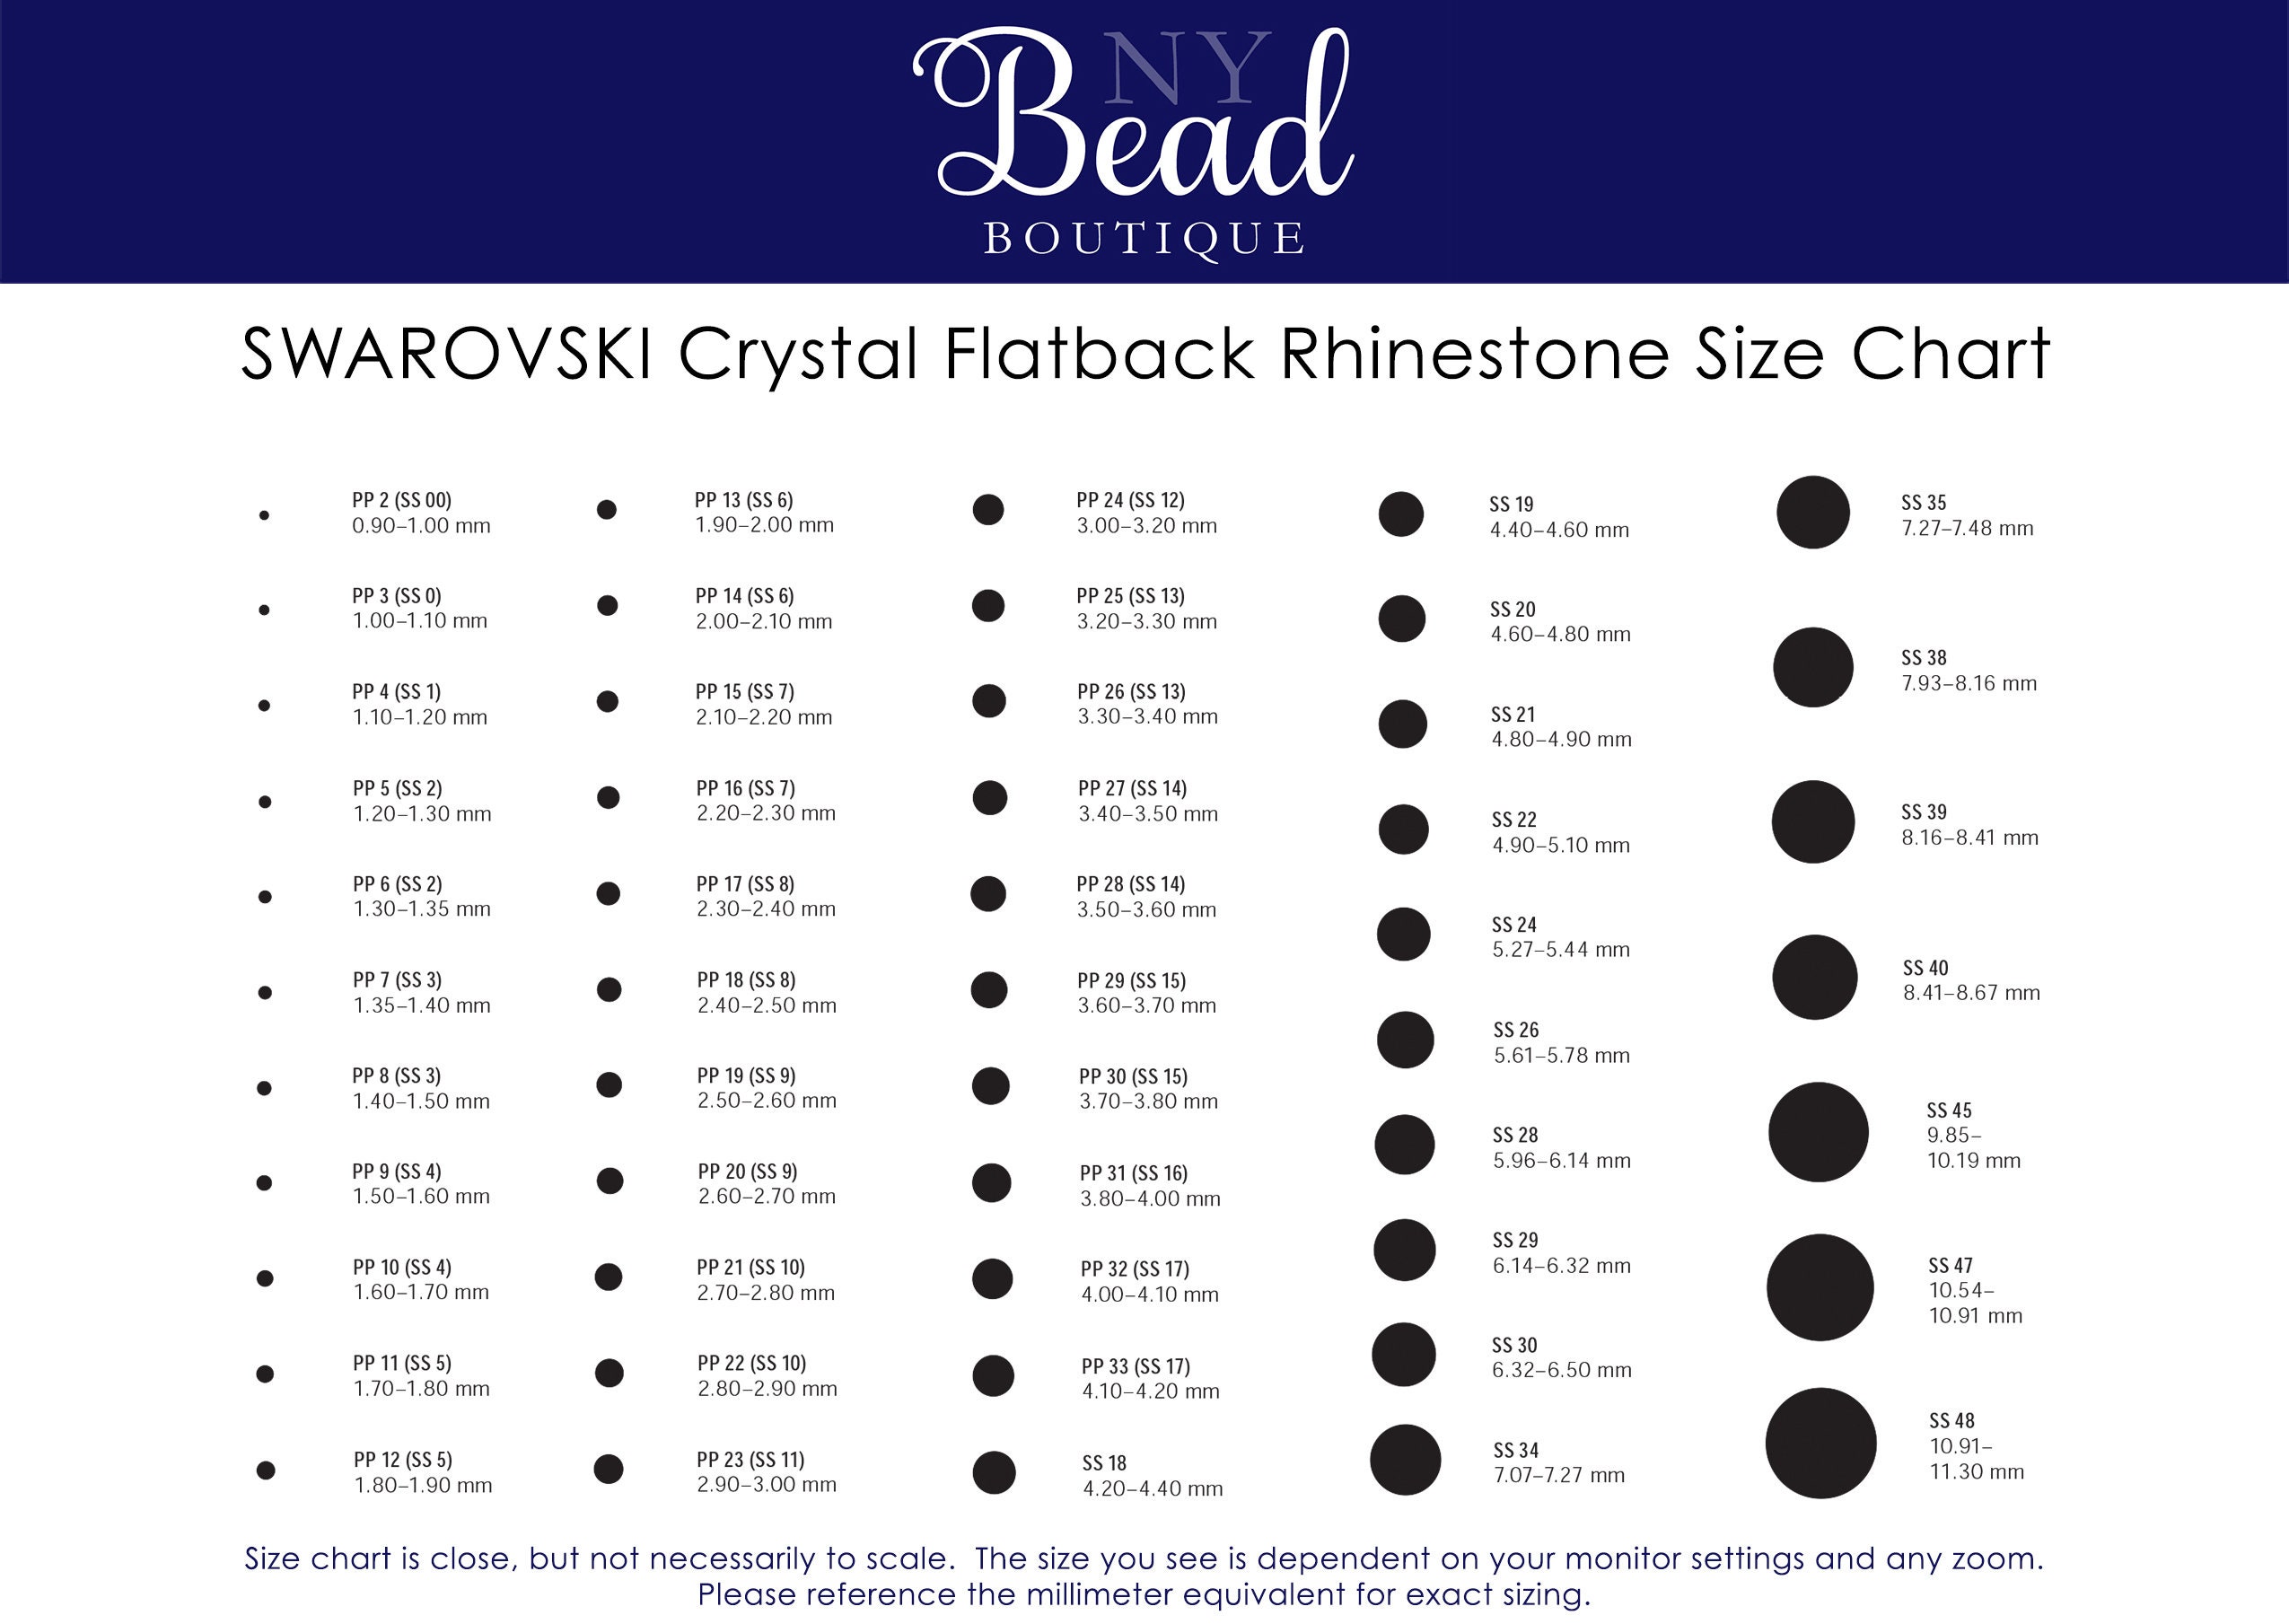 Preciosa Viva Crystal AB Rhinestones - Flatback - SS7 (2.10mm - 2.30mm) -  144 Pieces